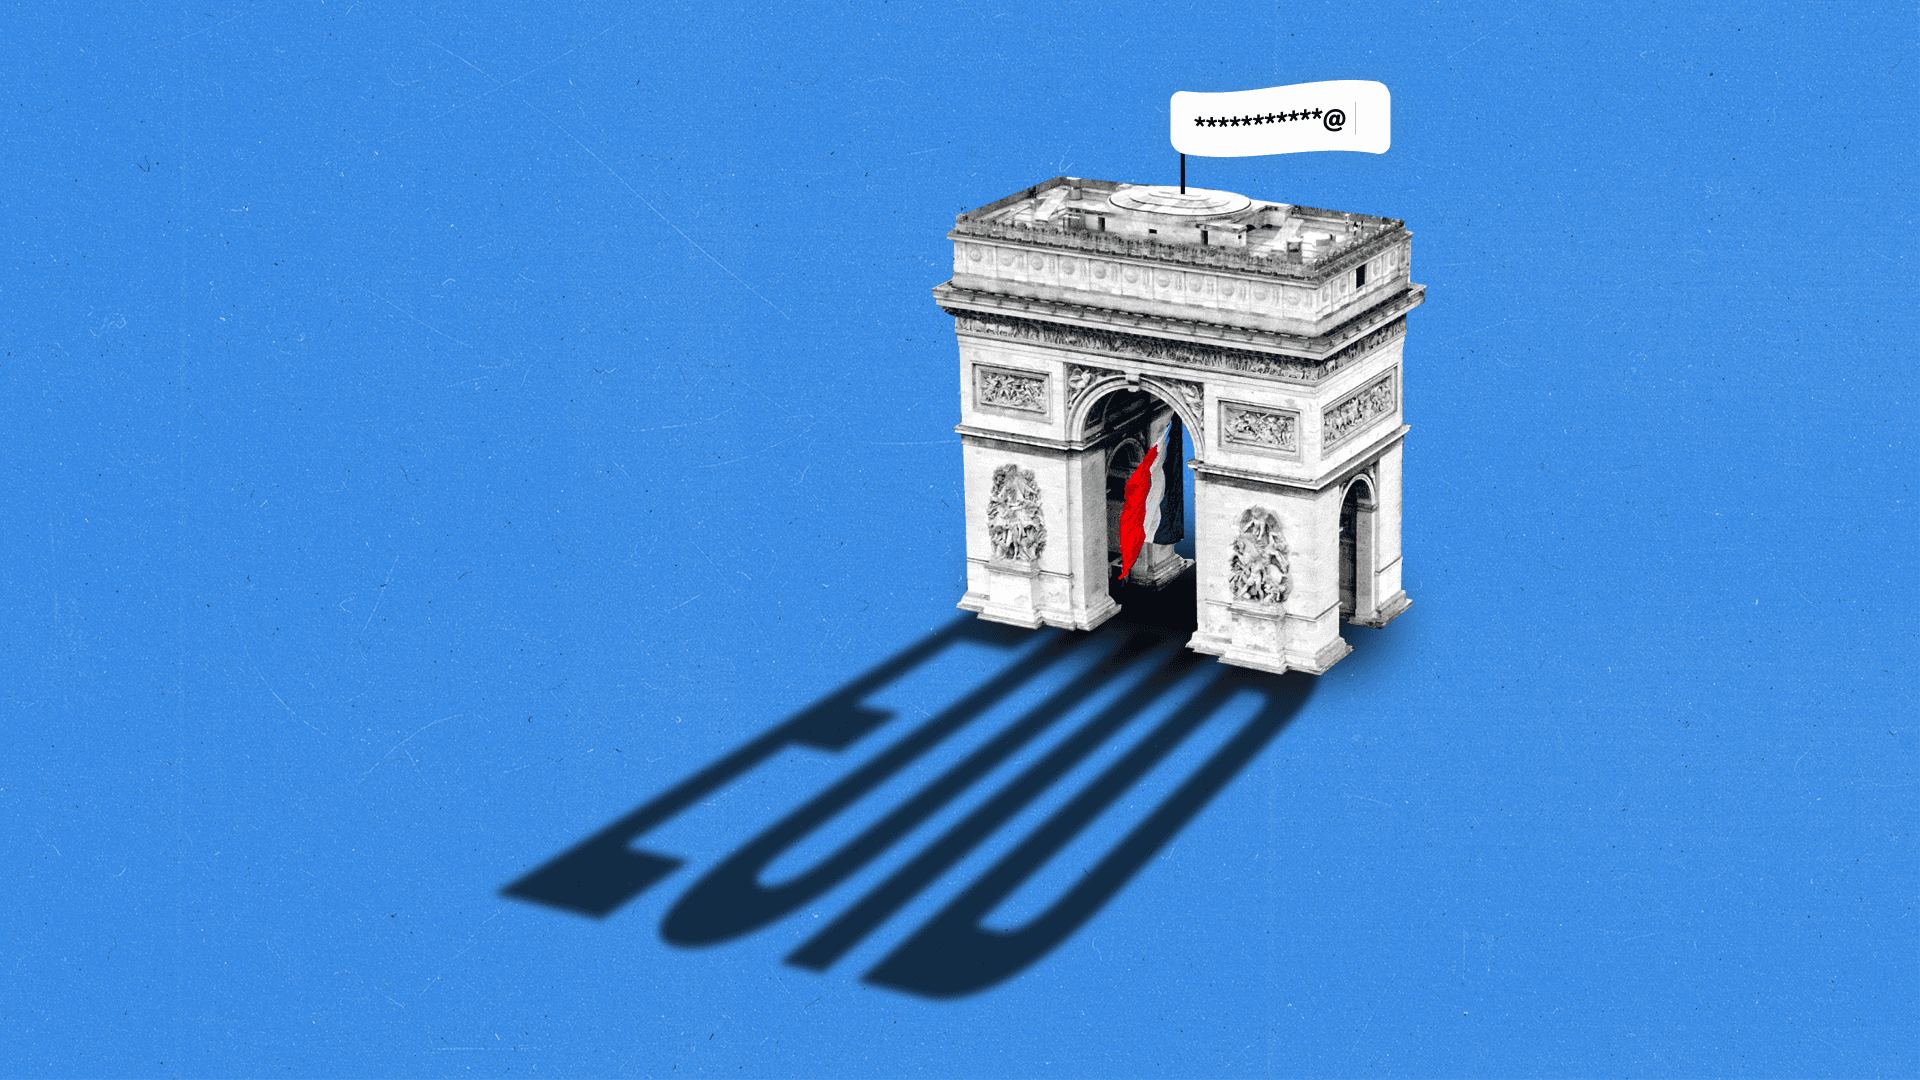 The Arc de Triomphe casting a shadow reading "EUID"